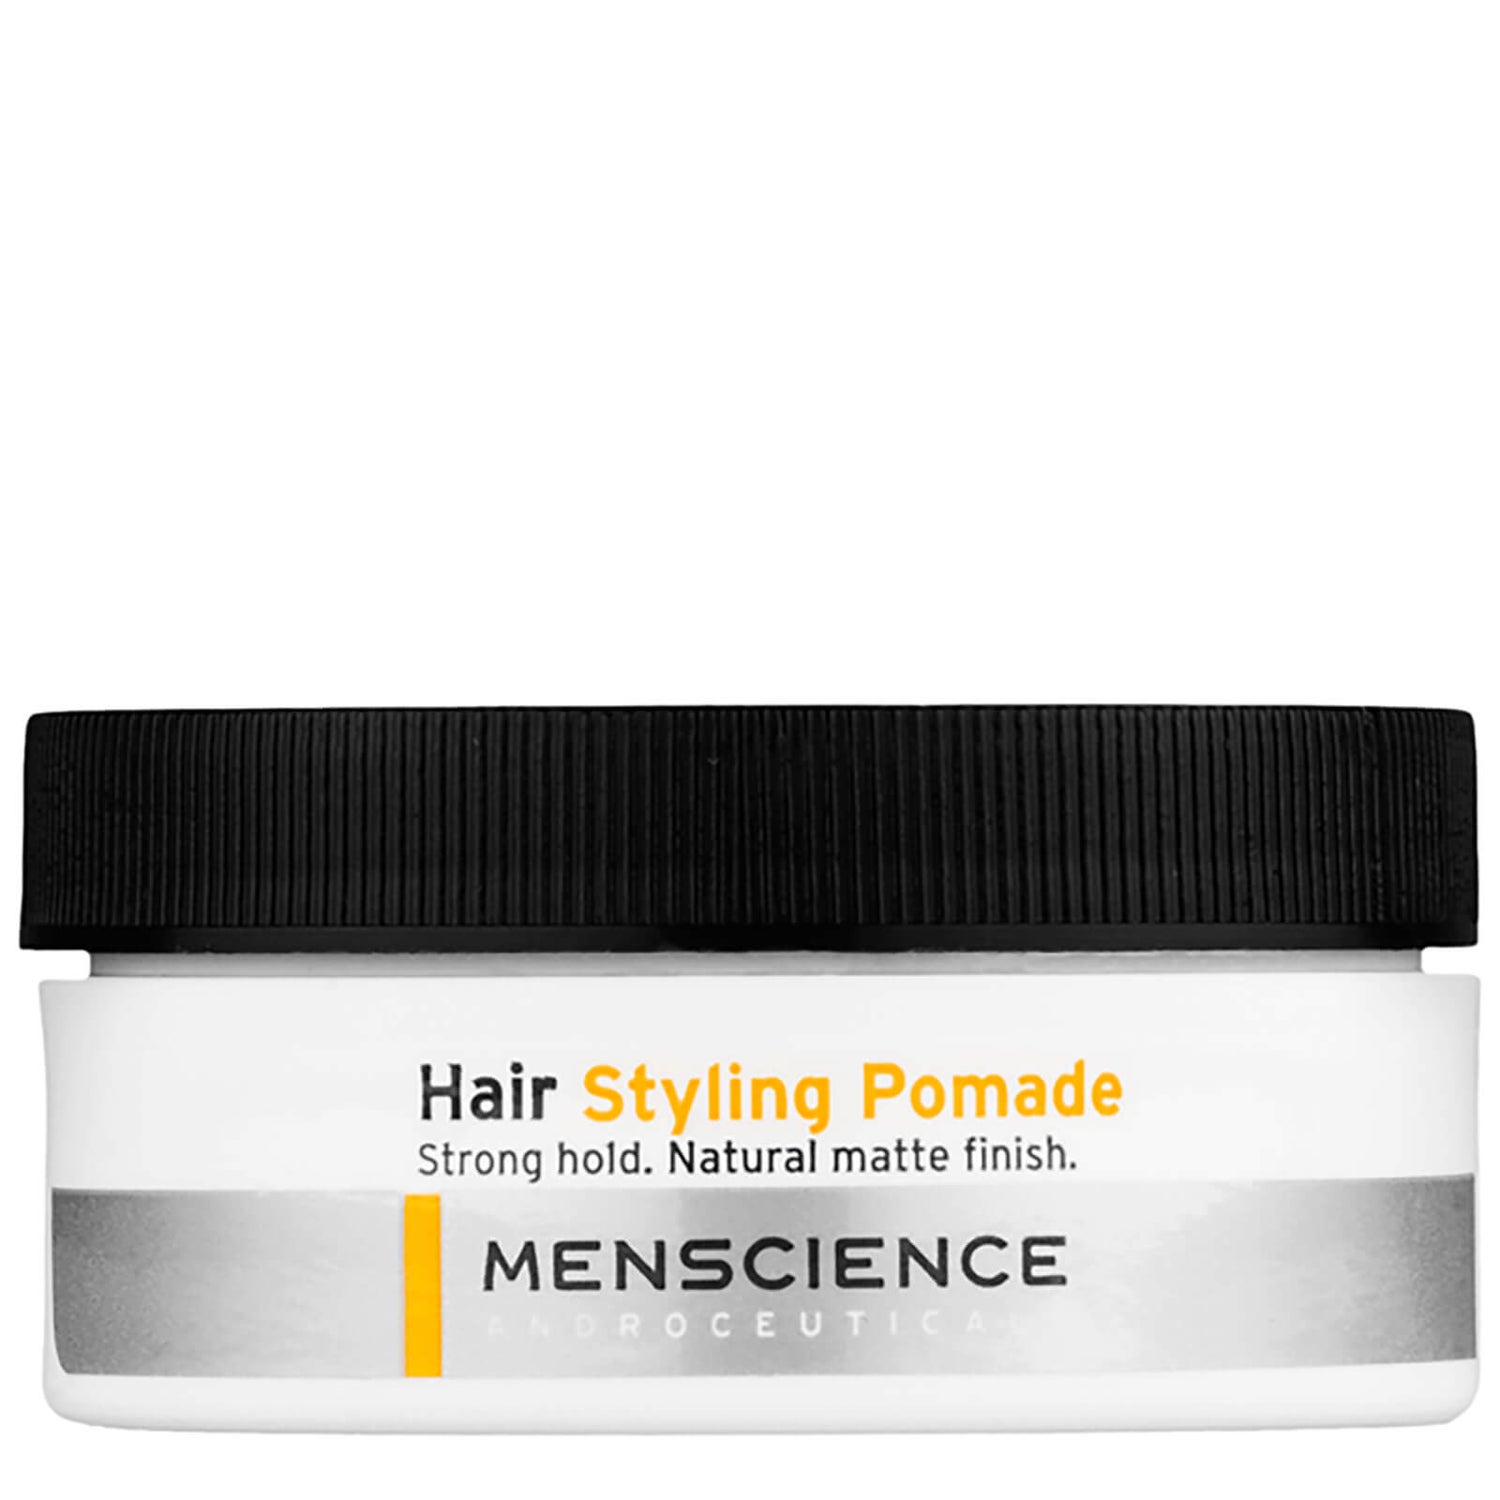 Помада для укладки волос Menscience Hair Styling Pomade (56 г)